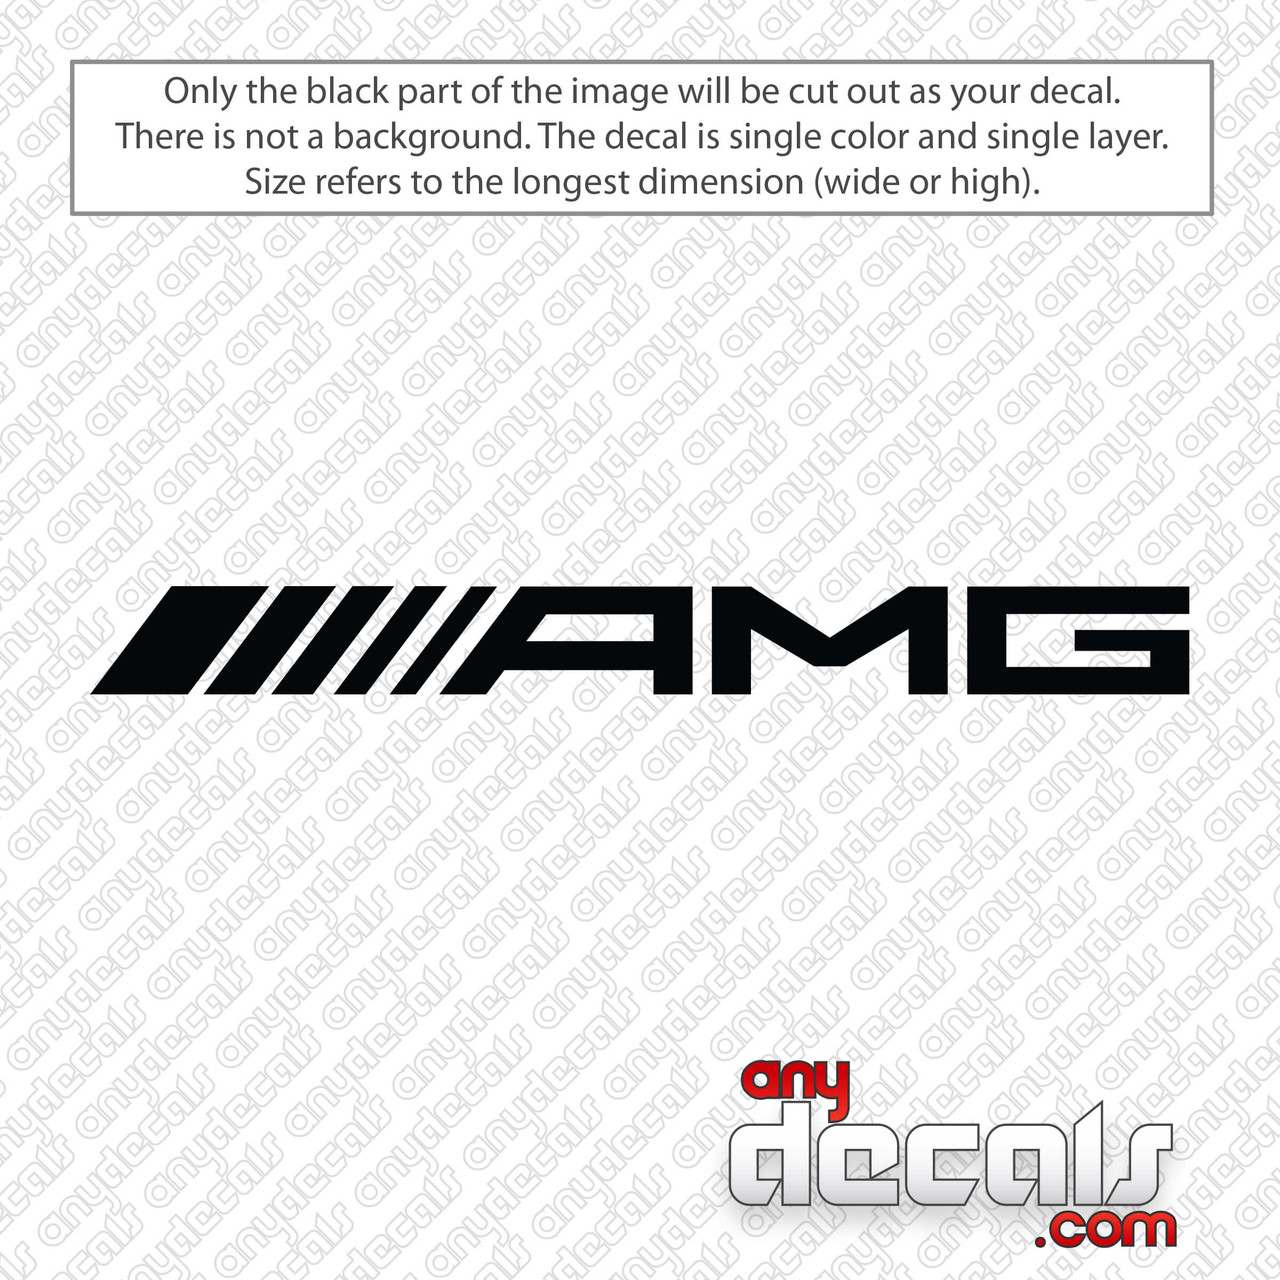 Mercedes AMG Decal Sticker 